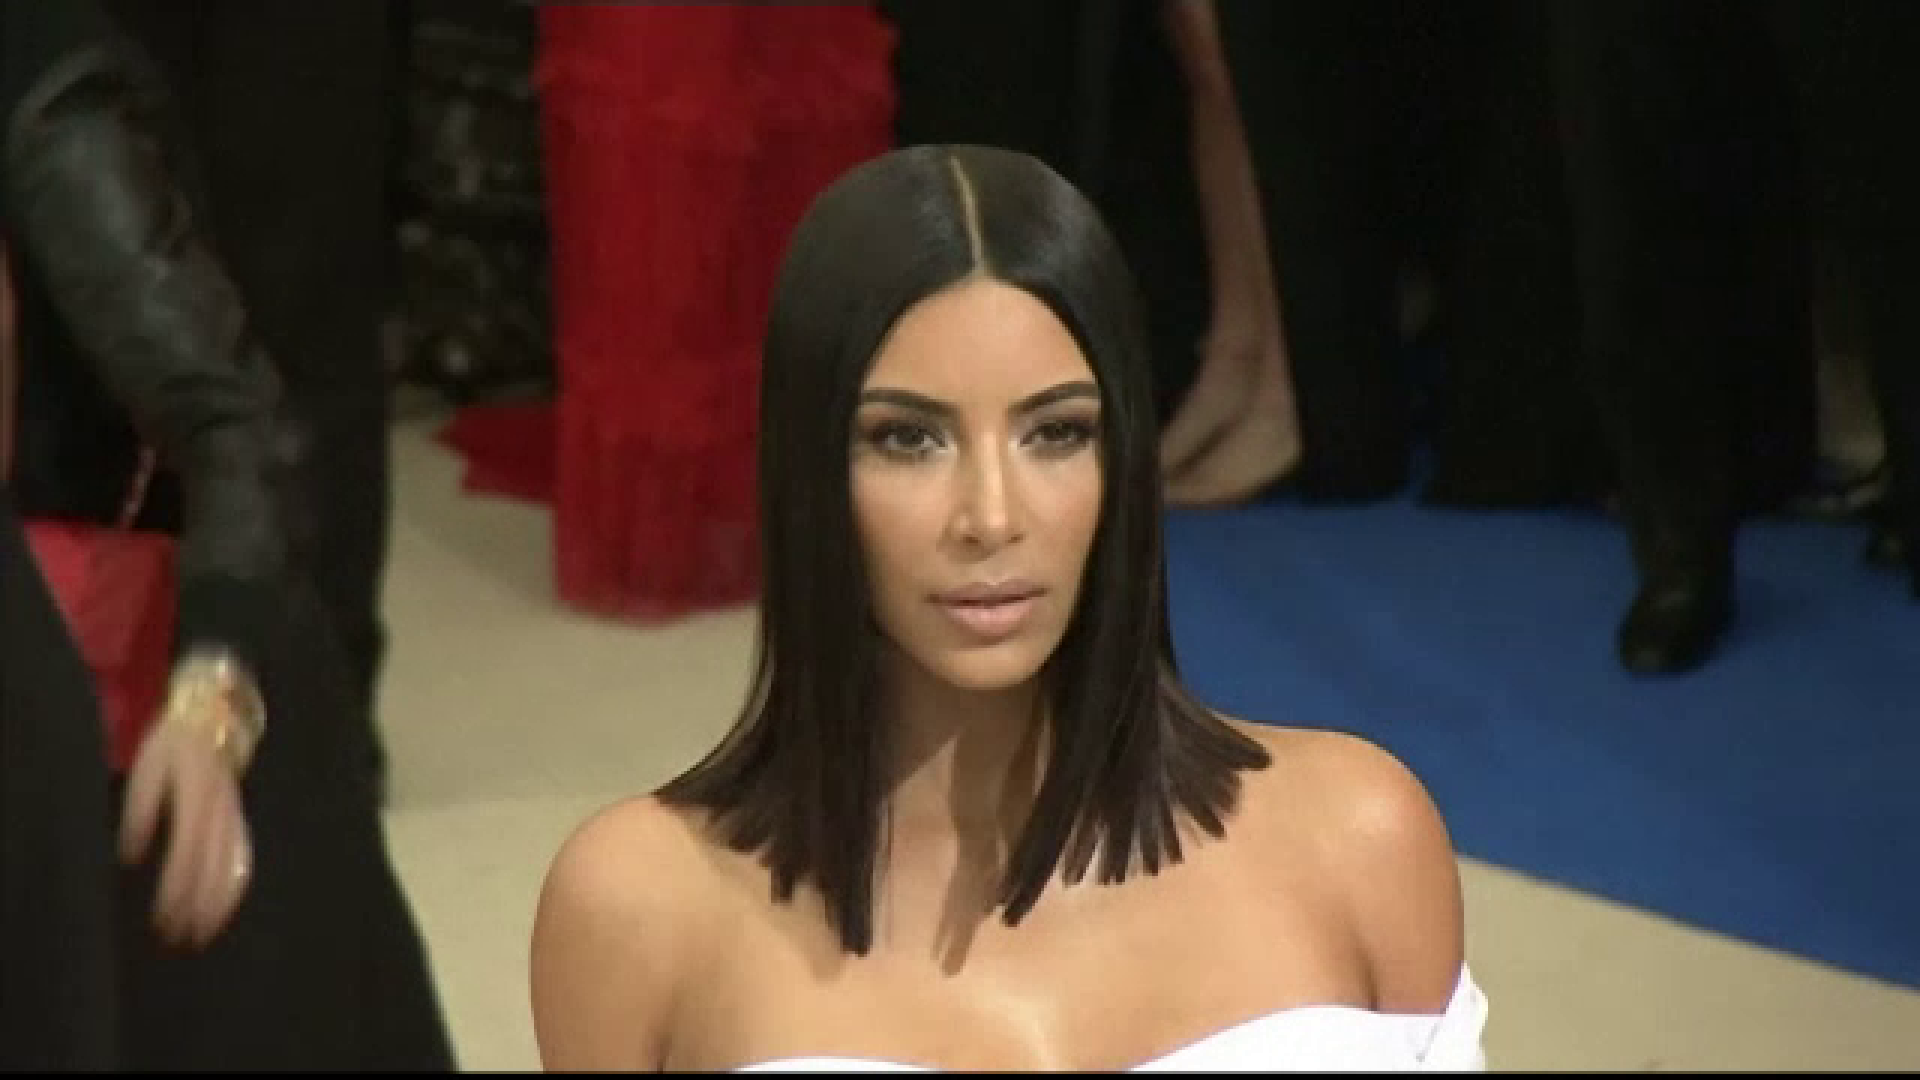 Kim Kardashian vrea o schimbare în plan profesional